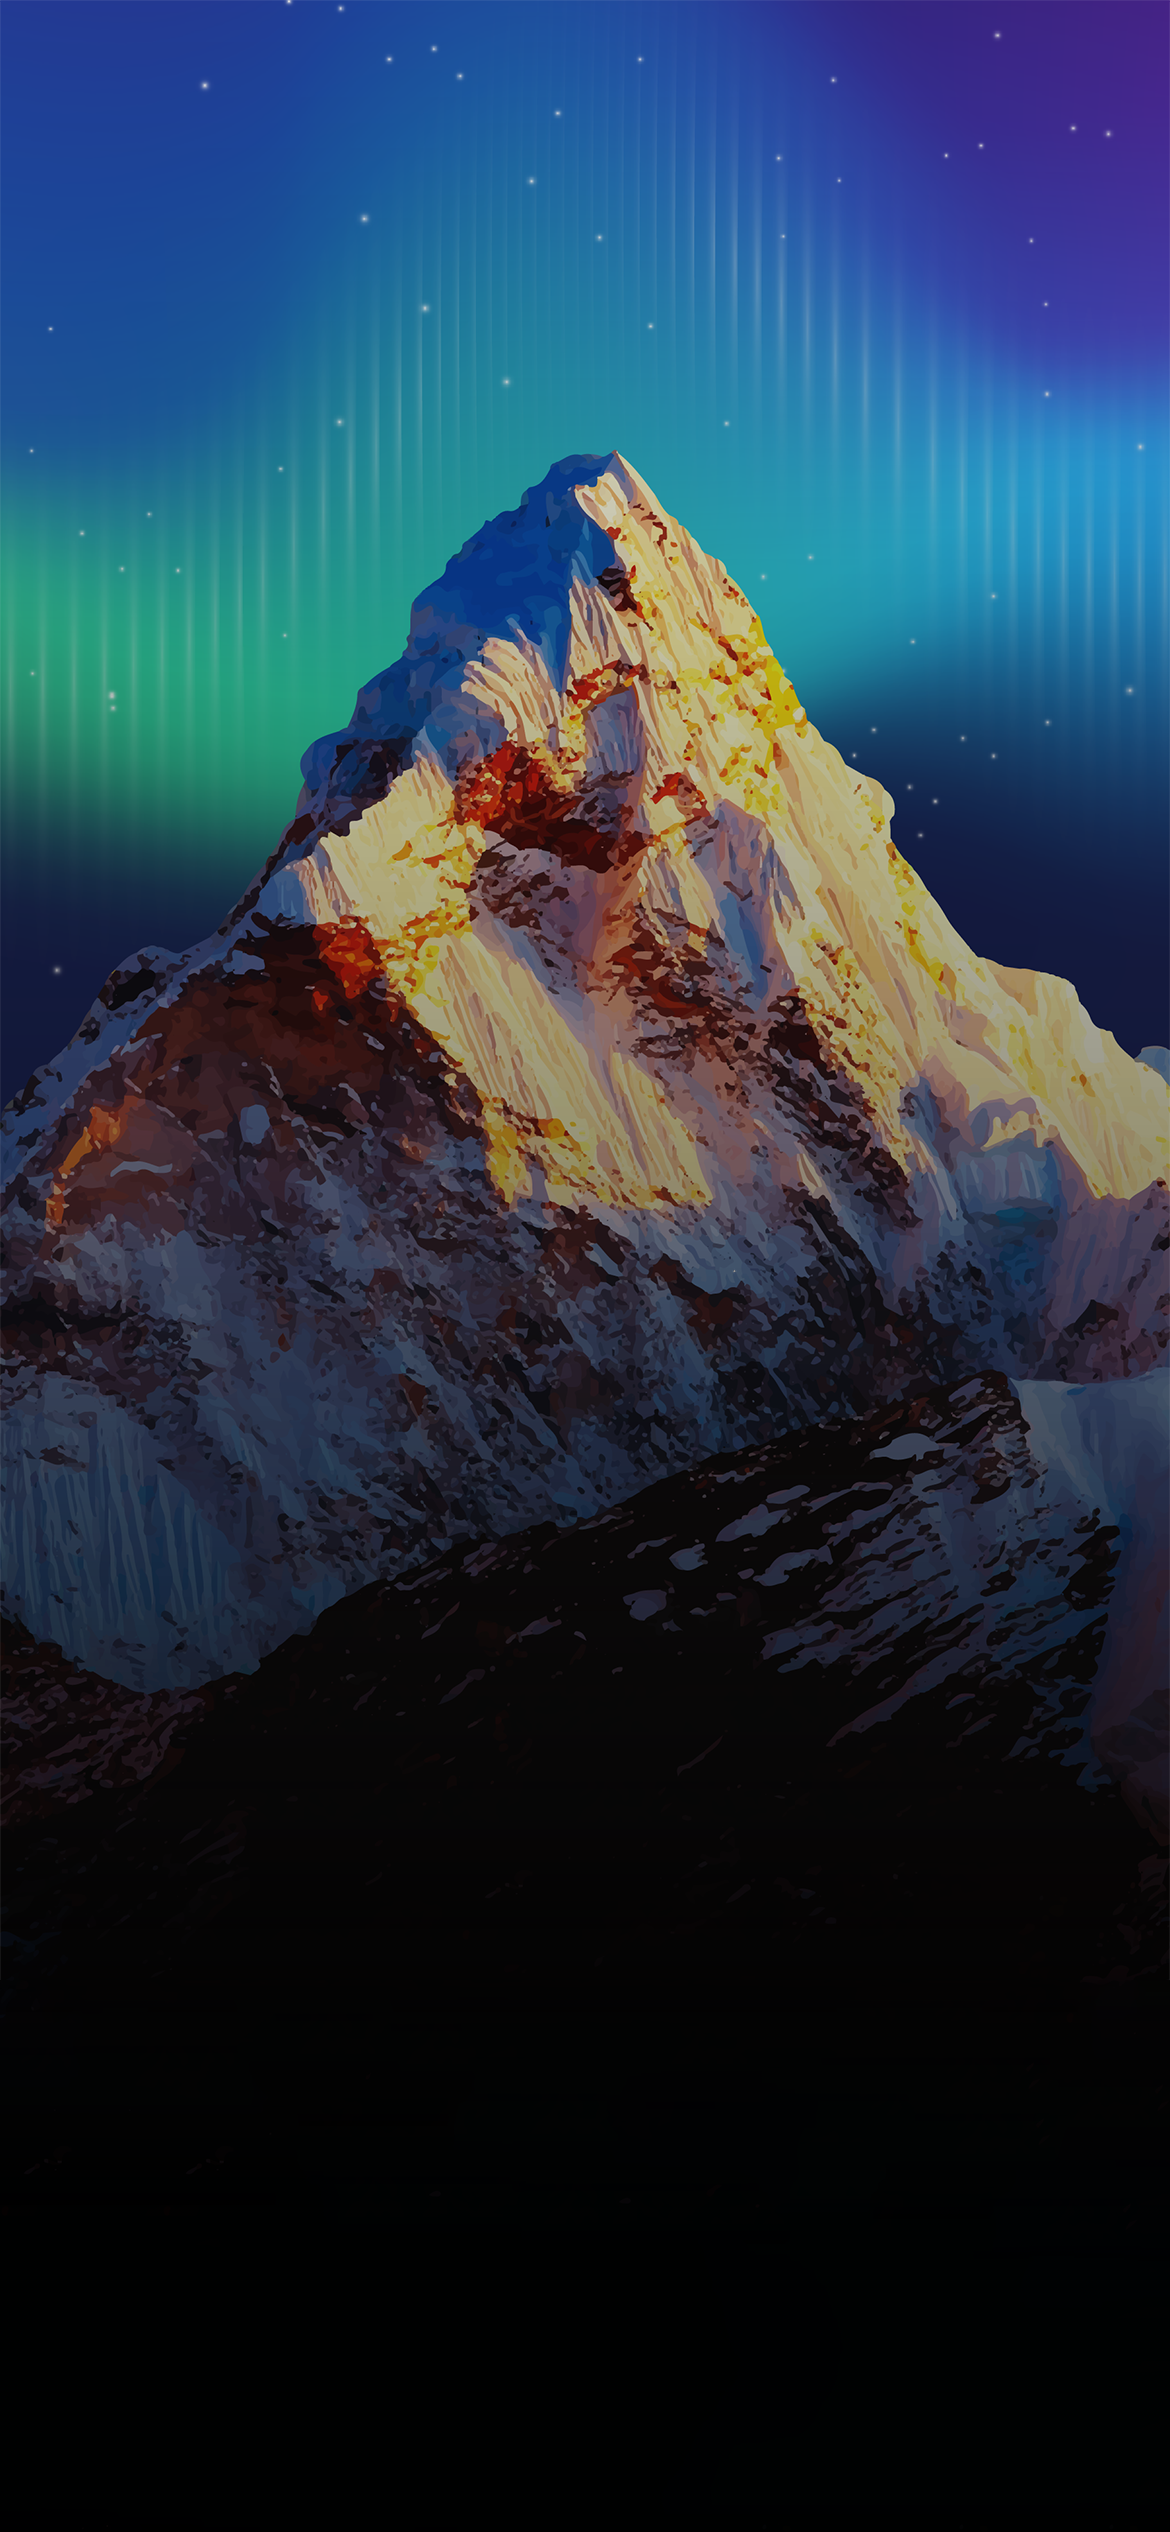 Wallpaper iPhone 13 Pro, Alpine Green, light beams, abstract, iOS 16, 4K,  OS #24021